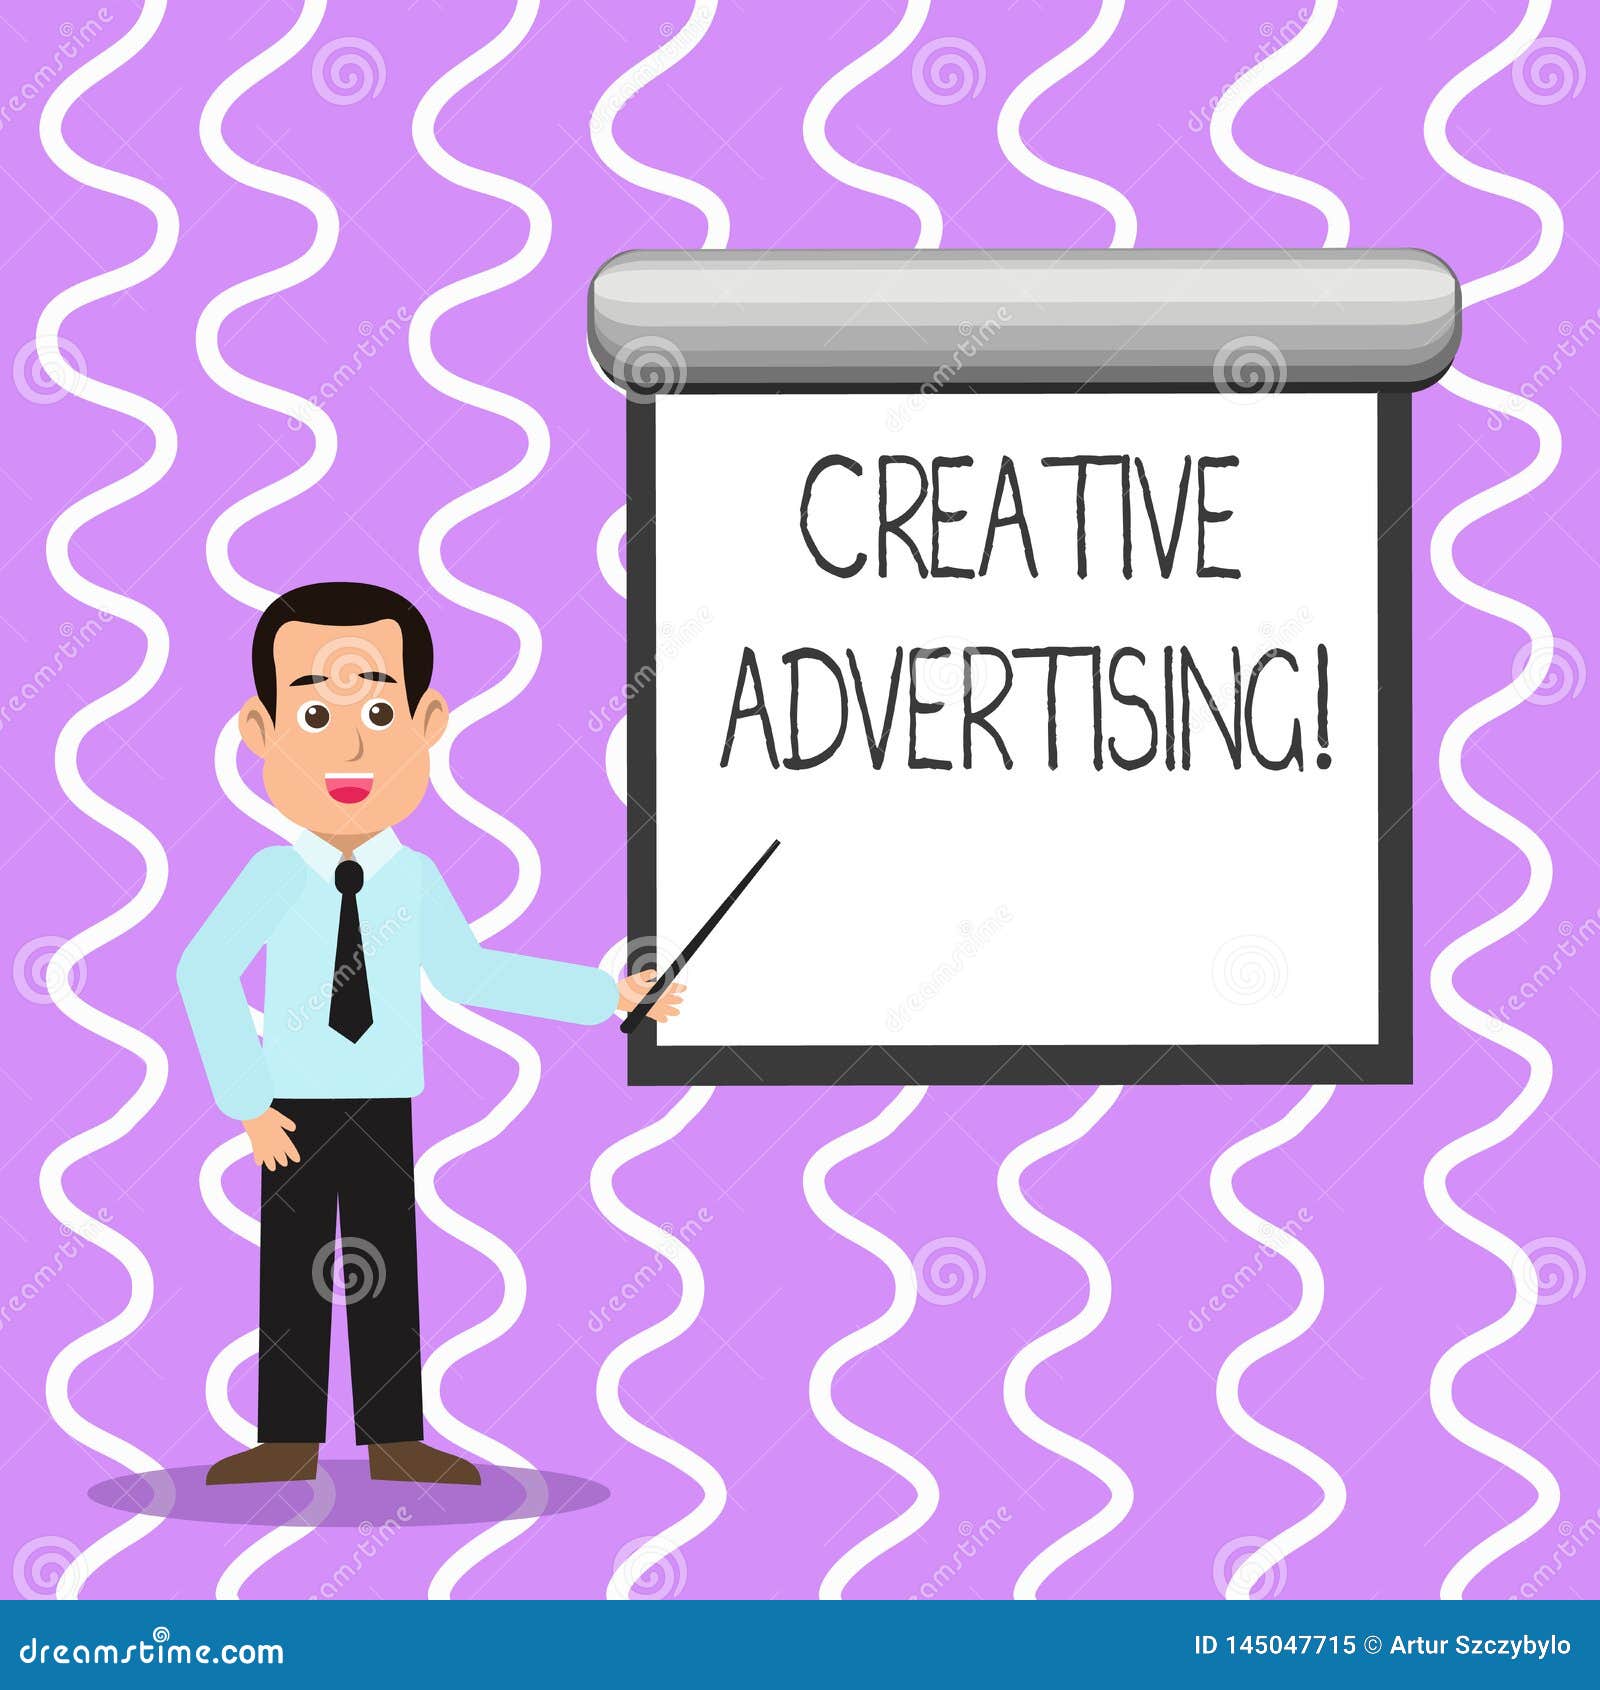 Creative Advertising Business Ideas